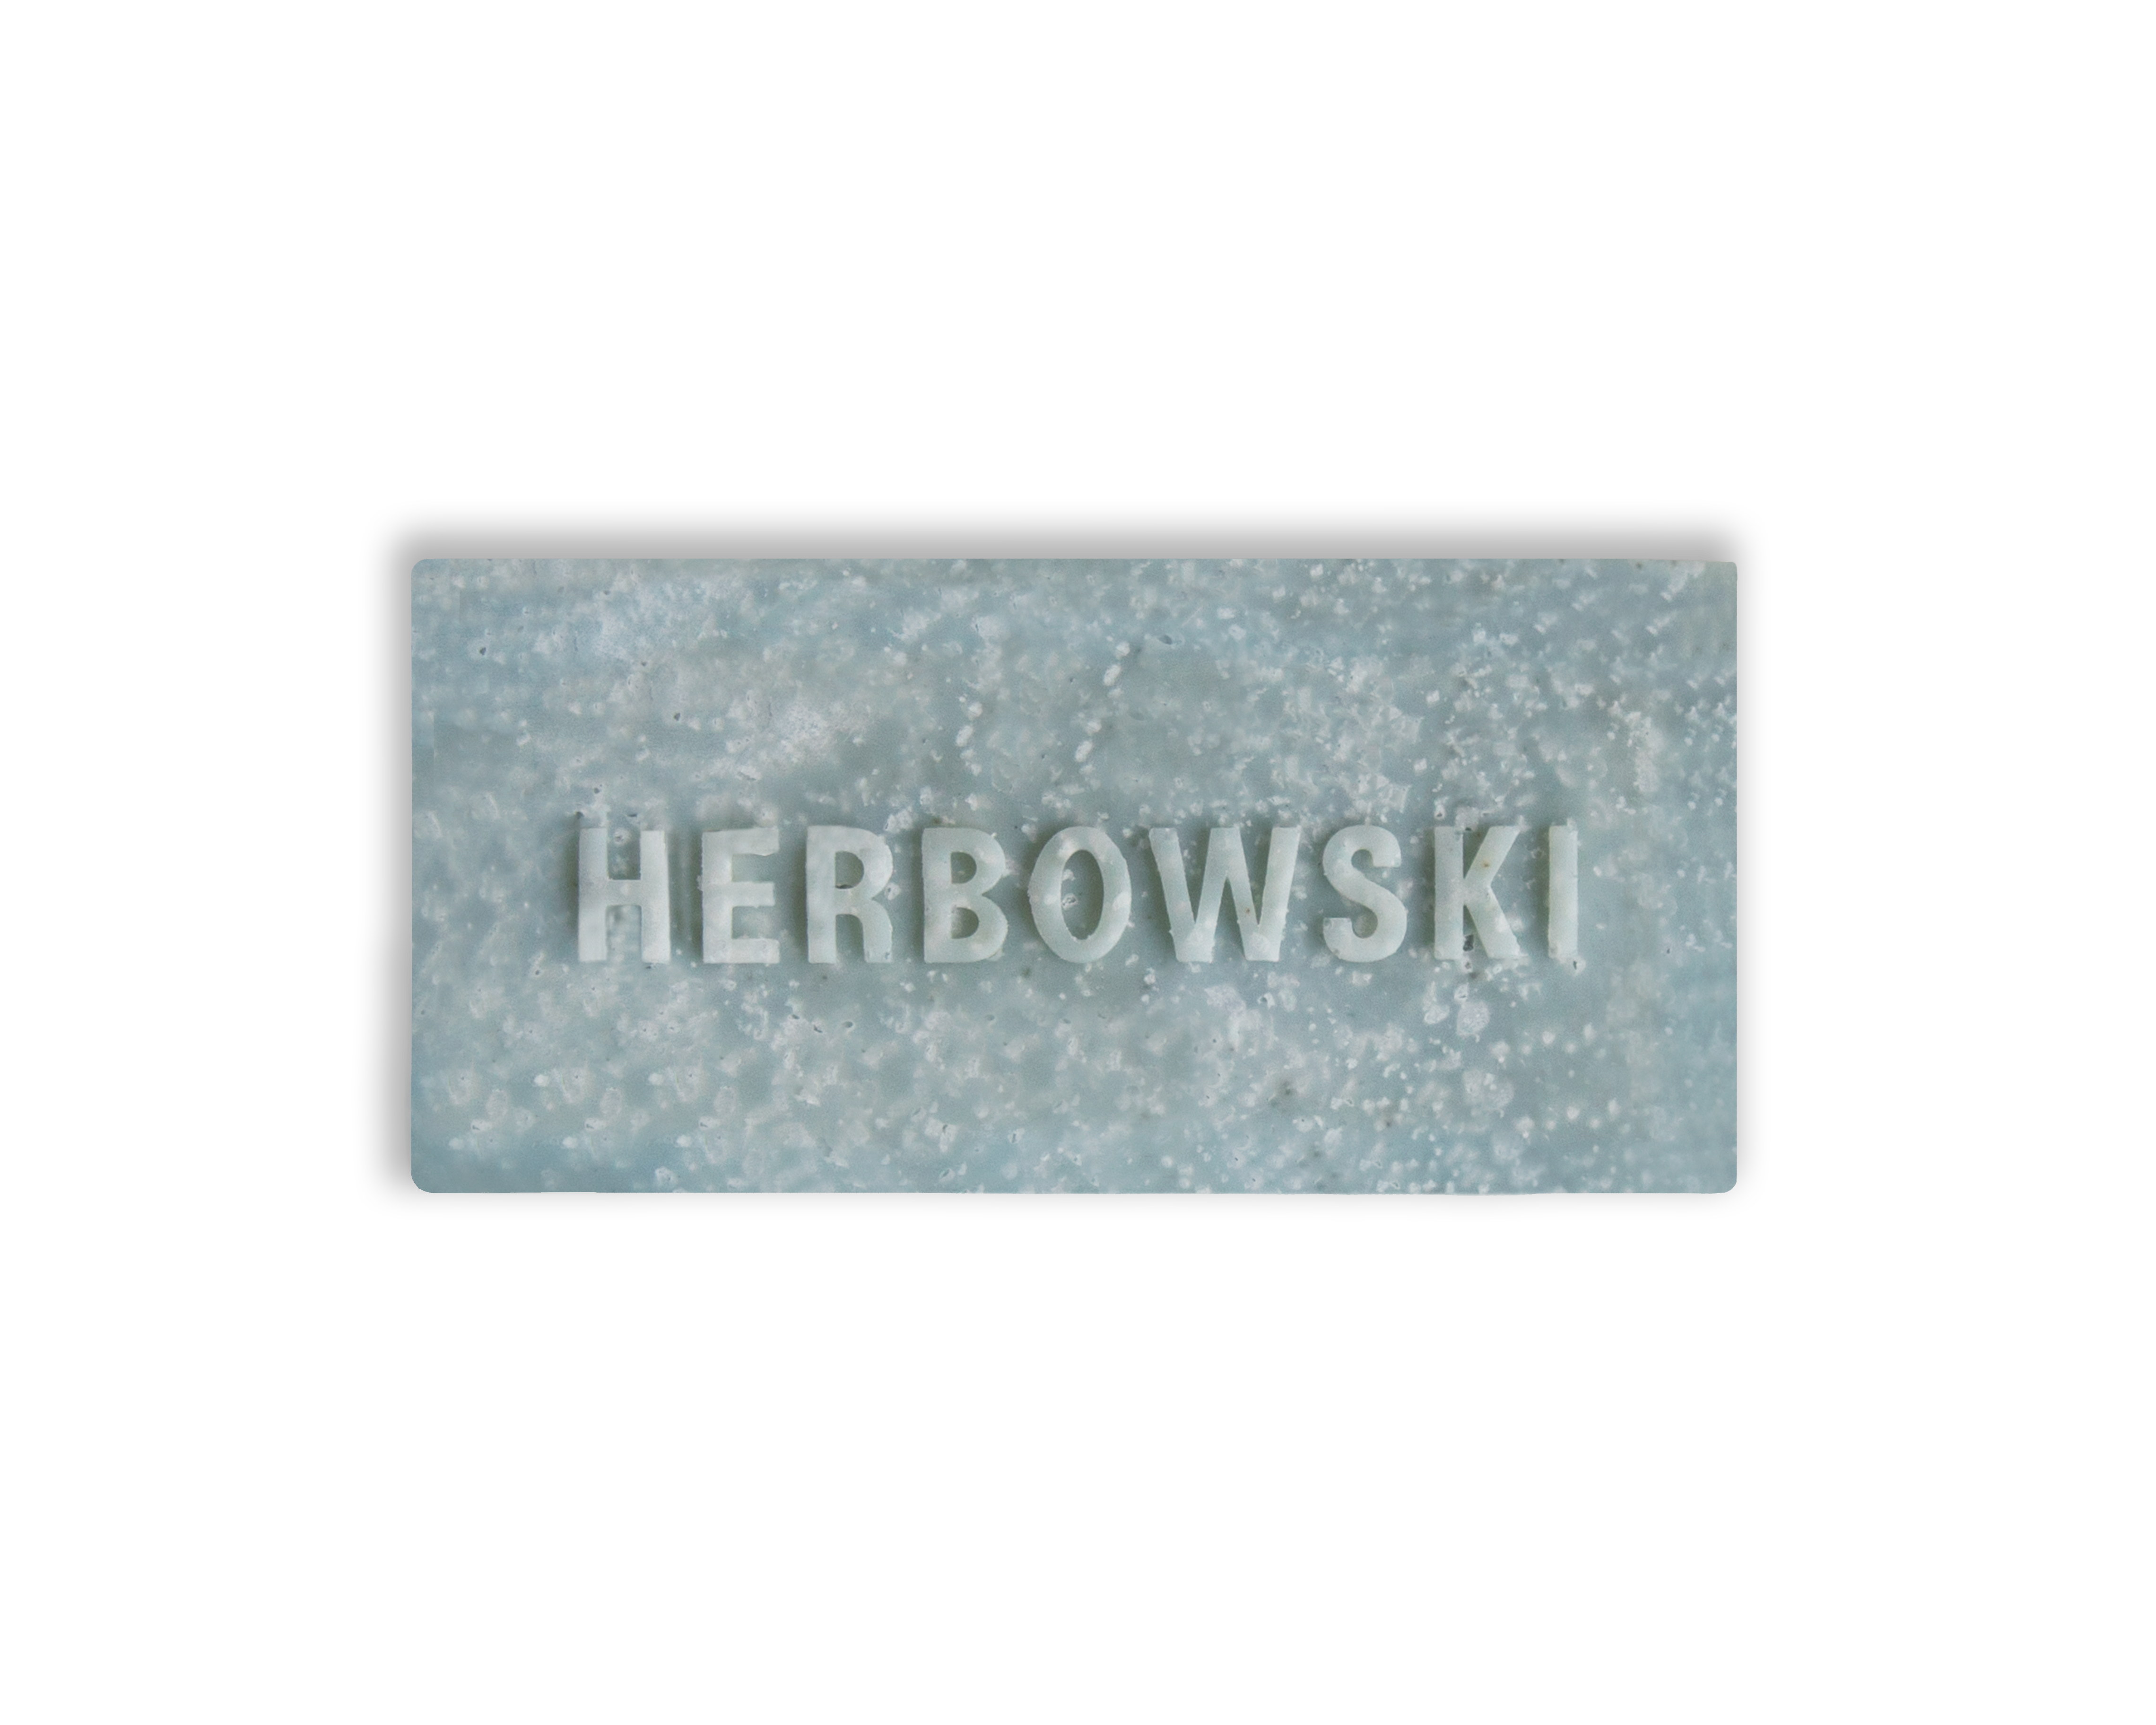 HERBOWSKI TIDAL EBBS SALT SOAP BAR